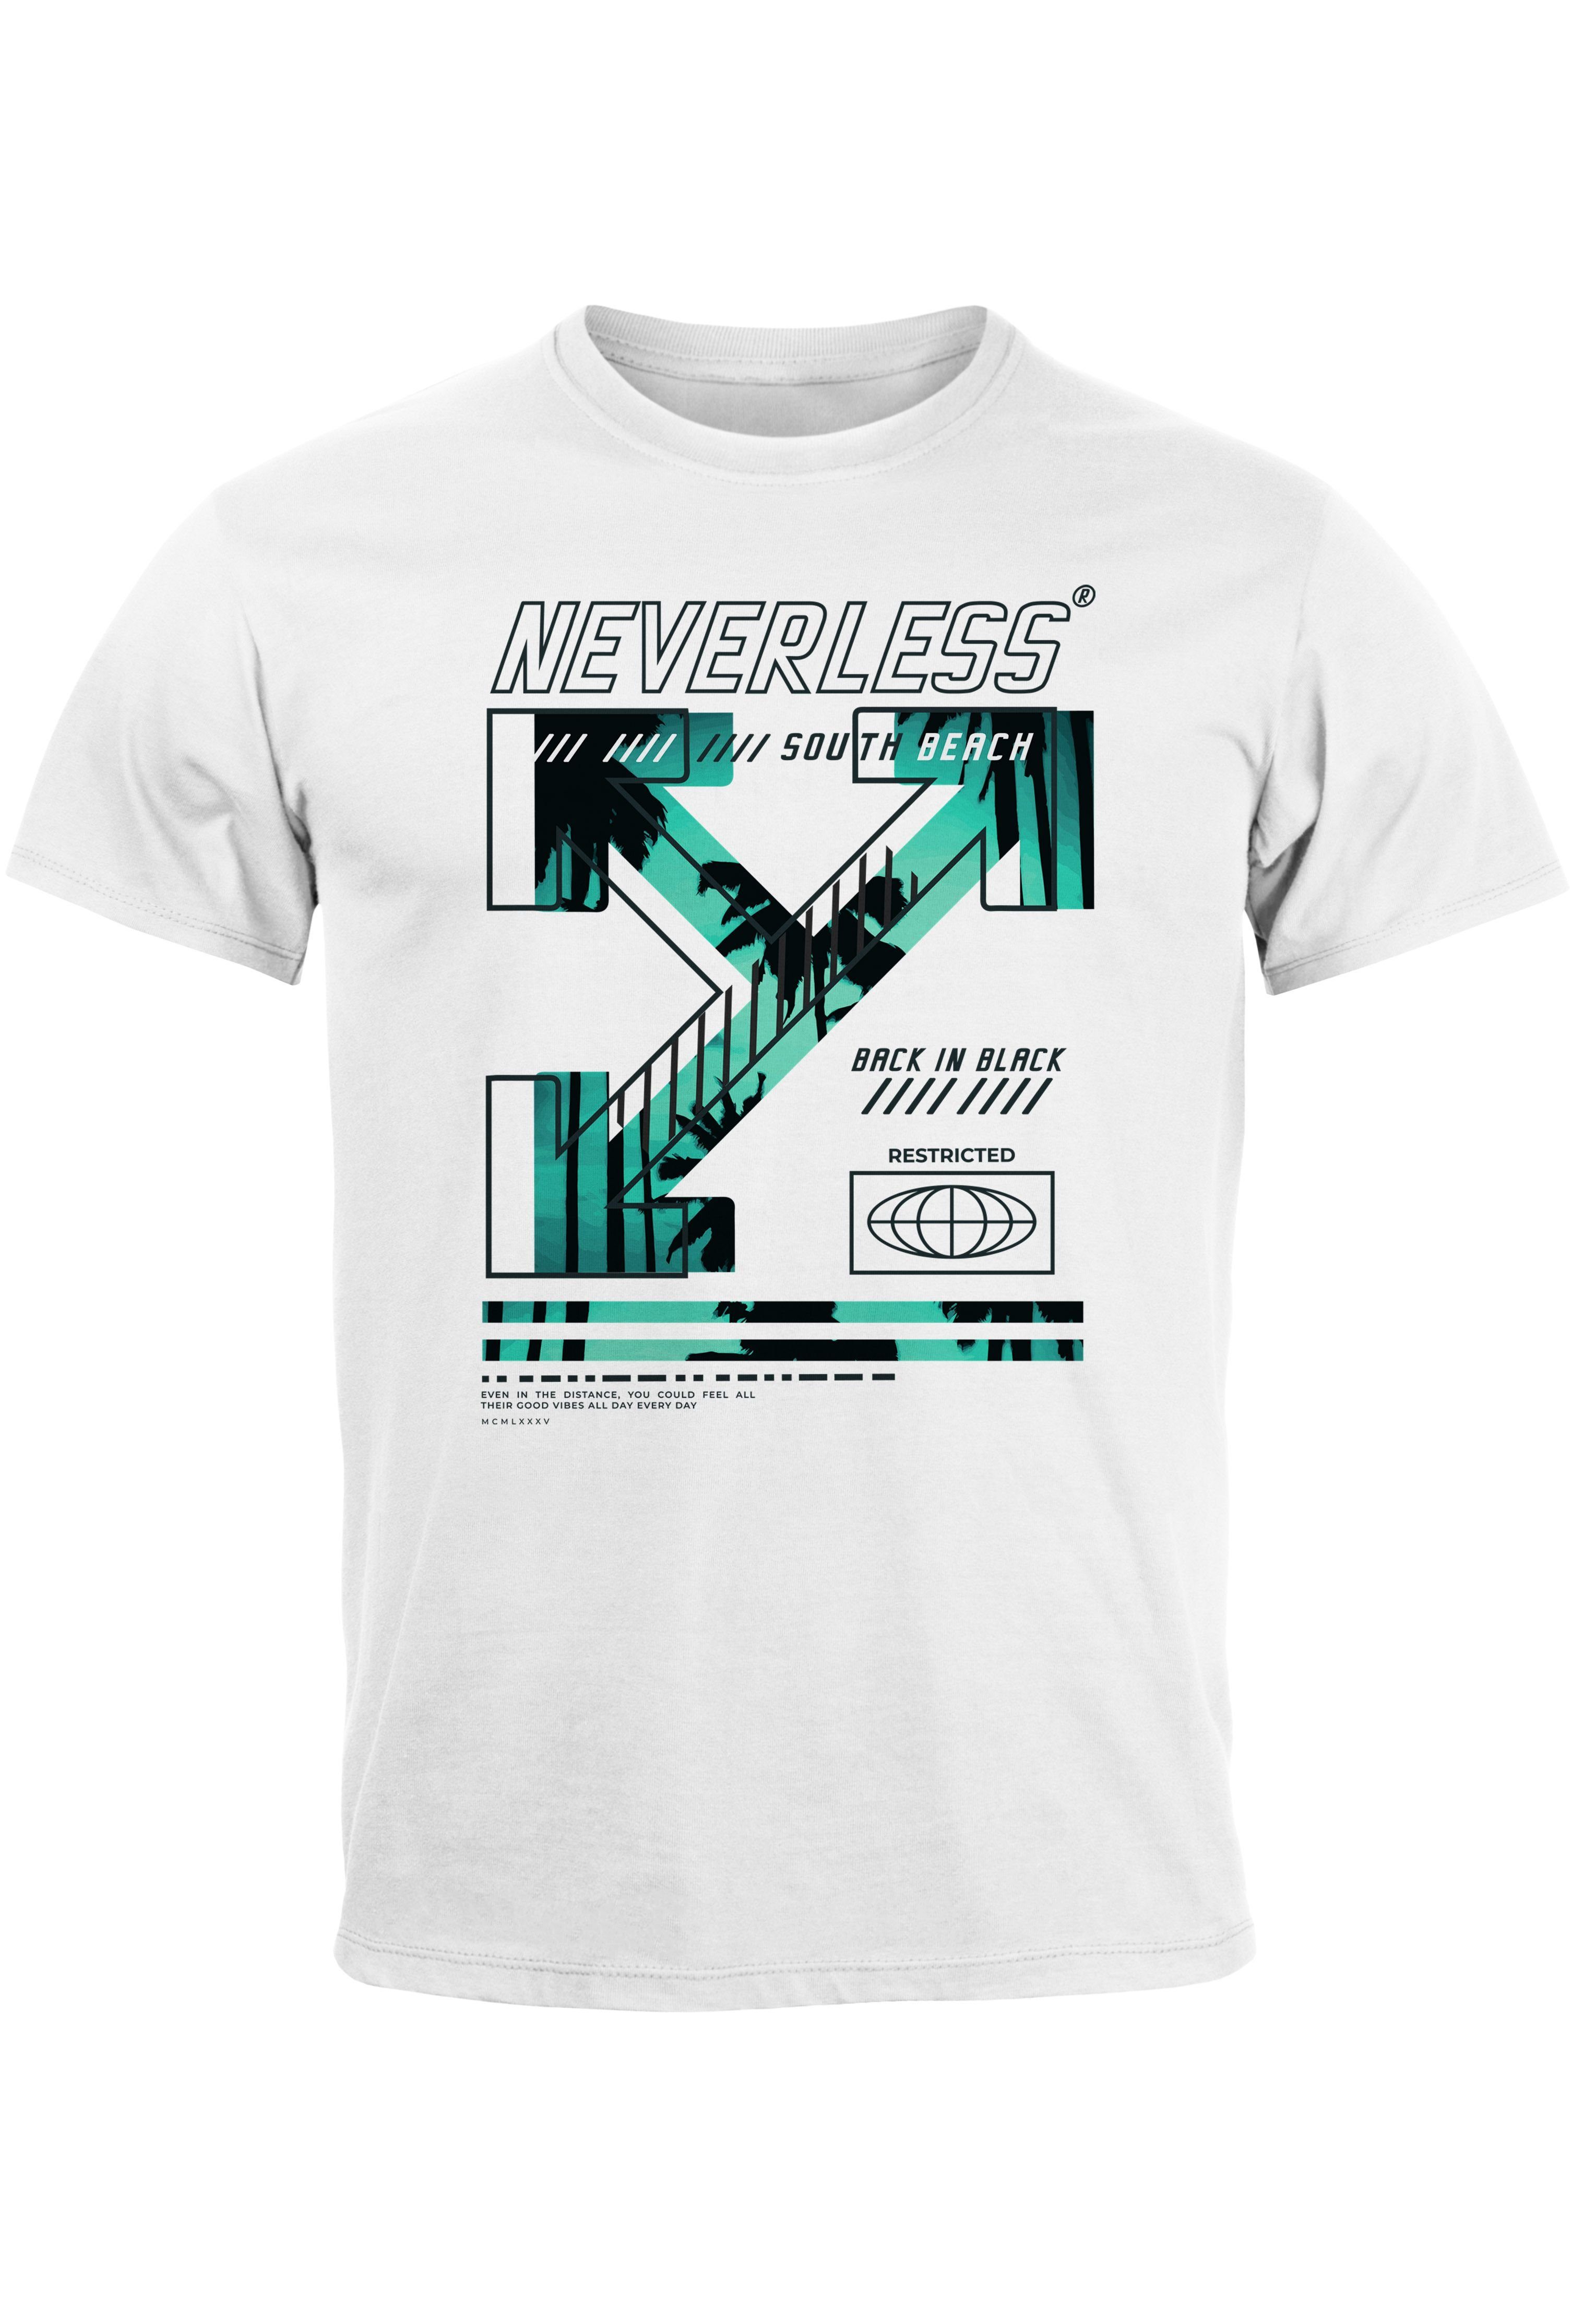 Neverless Print-Shirt Herren T-Shirt Text Print Aufdruck South Beach Techwear Fashion Street mit Print weiß